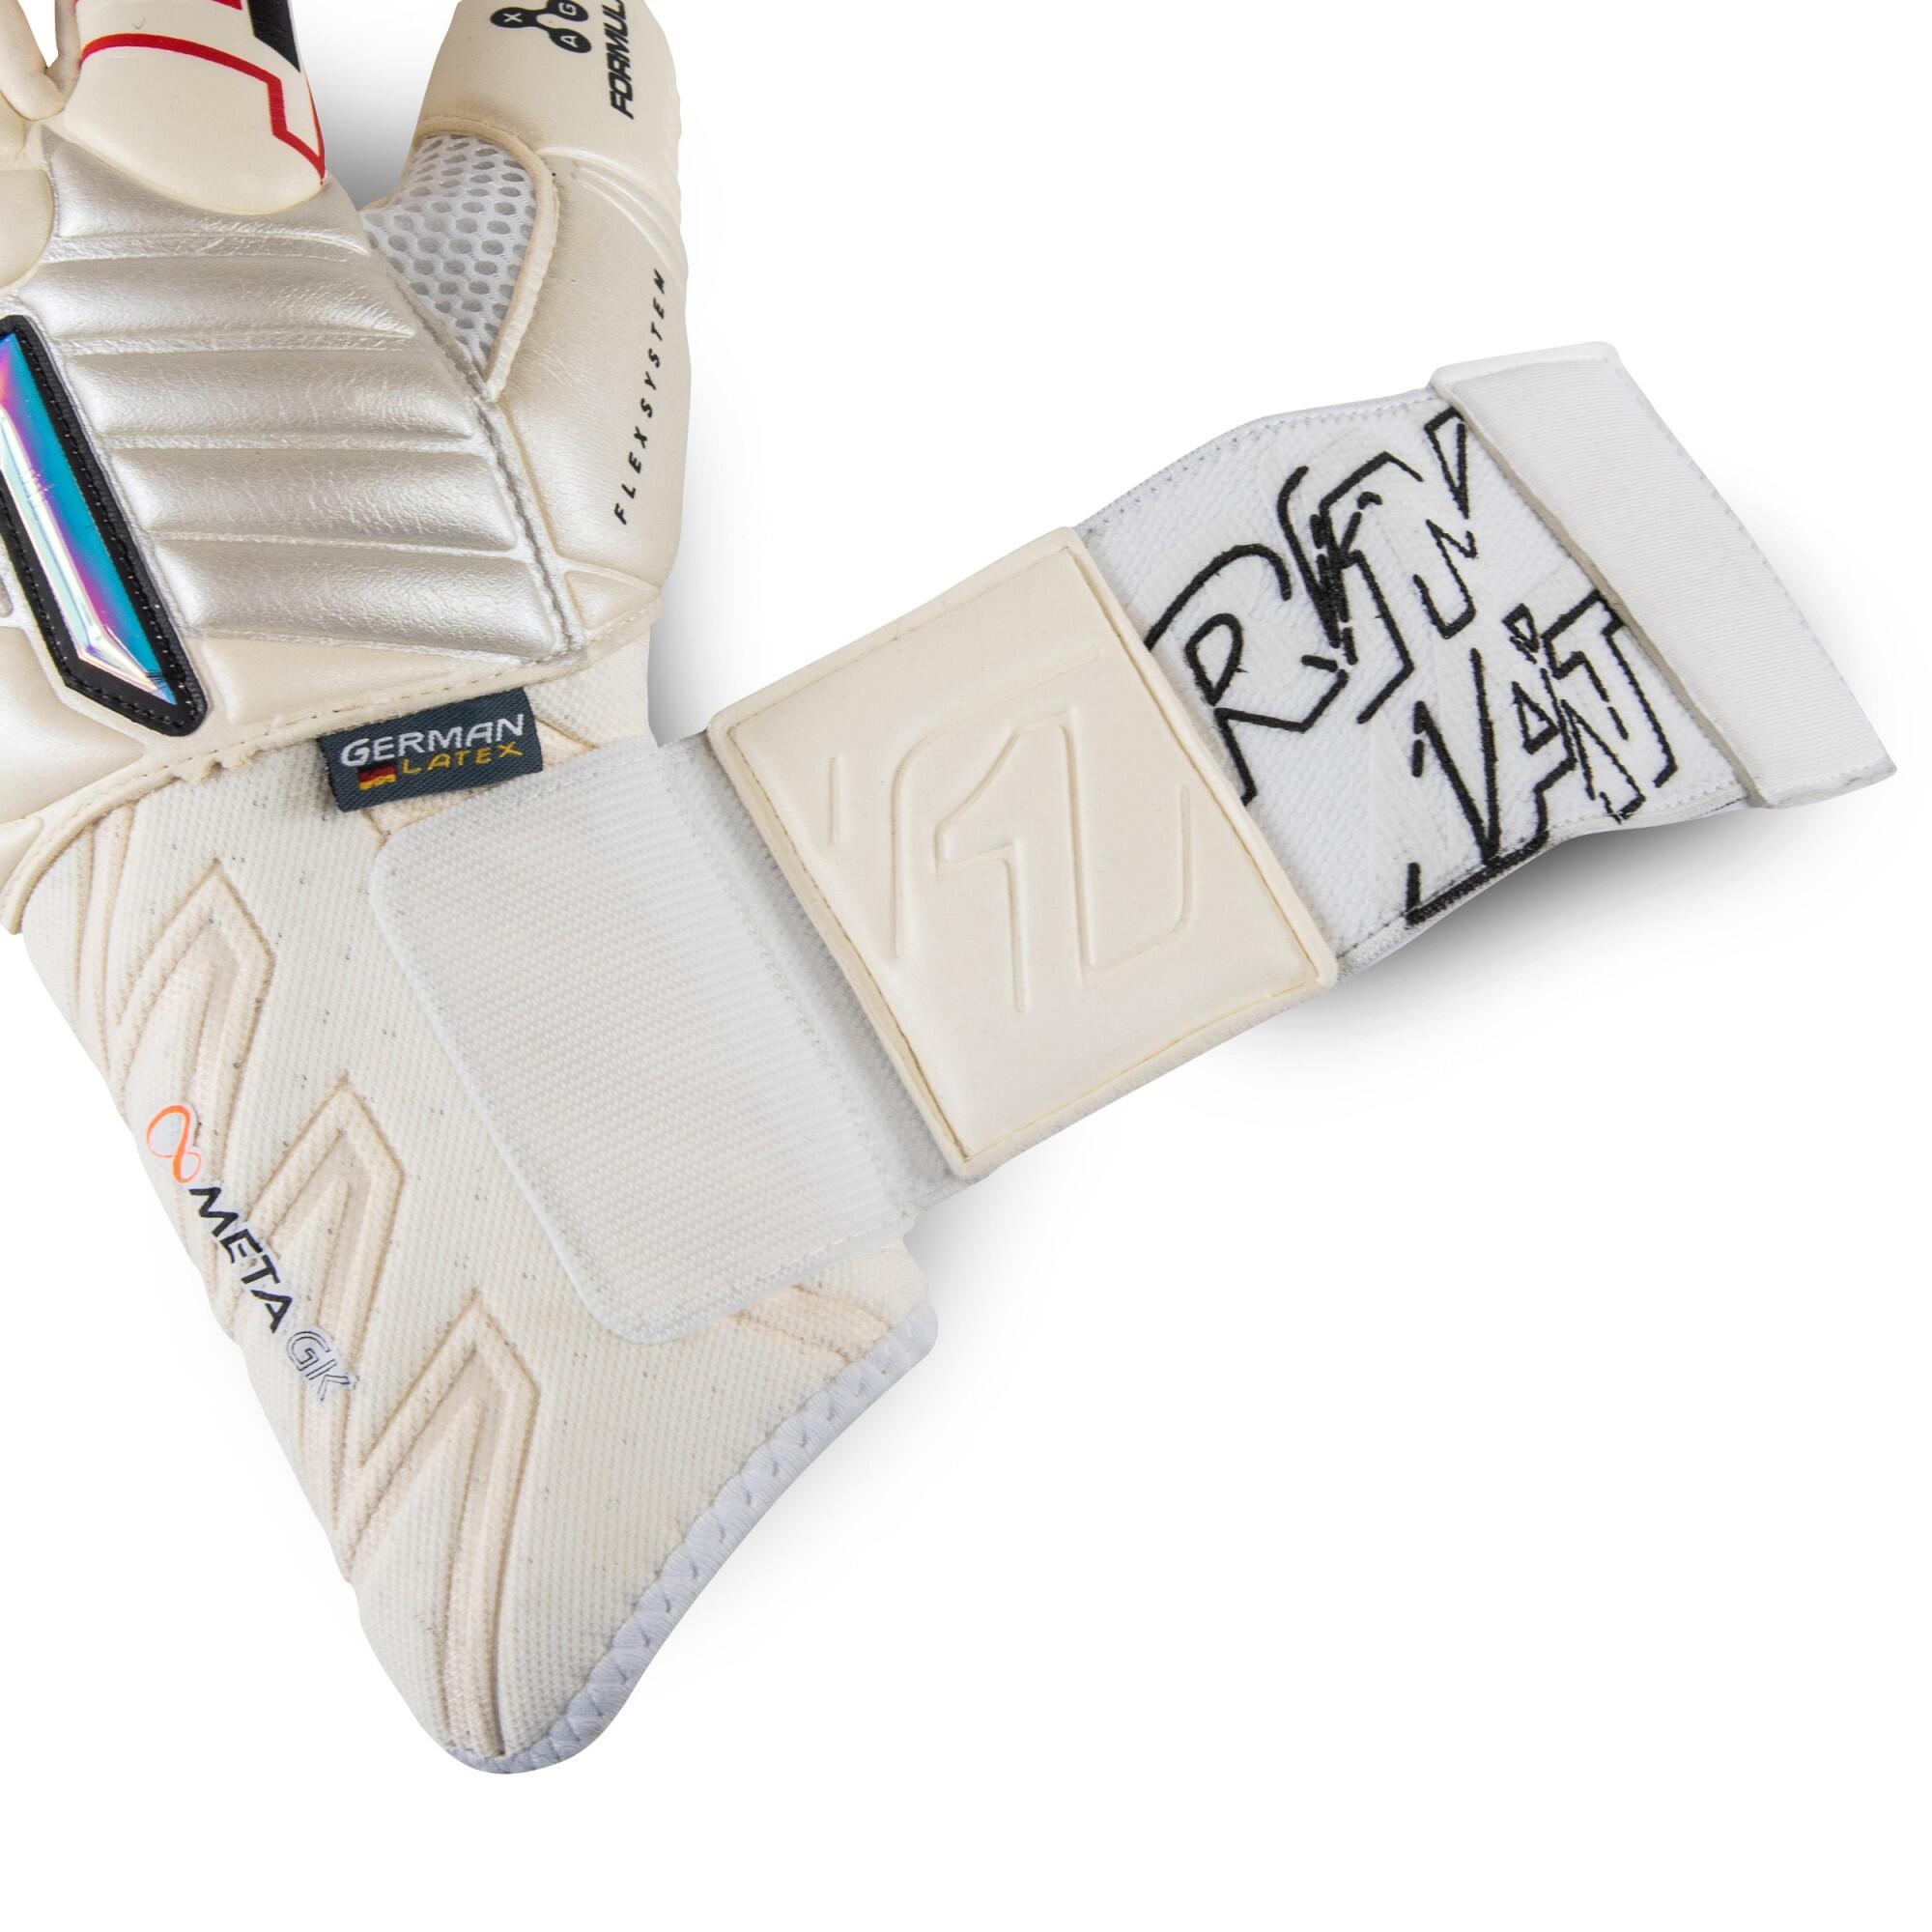 Rinat META GK PRO Goalkeeper Gloves 6/7